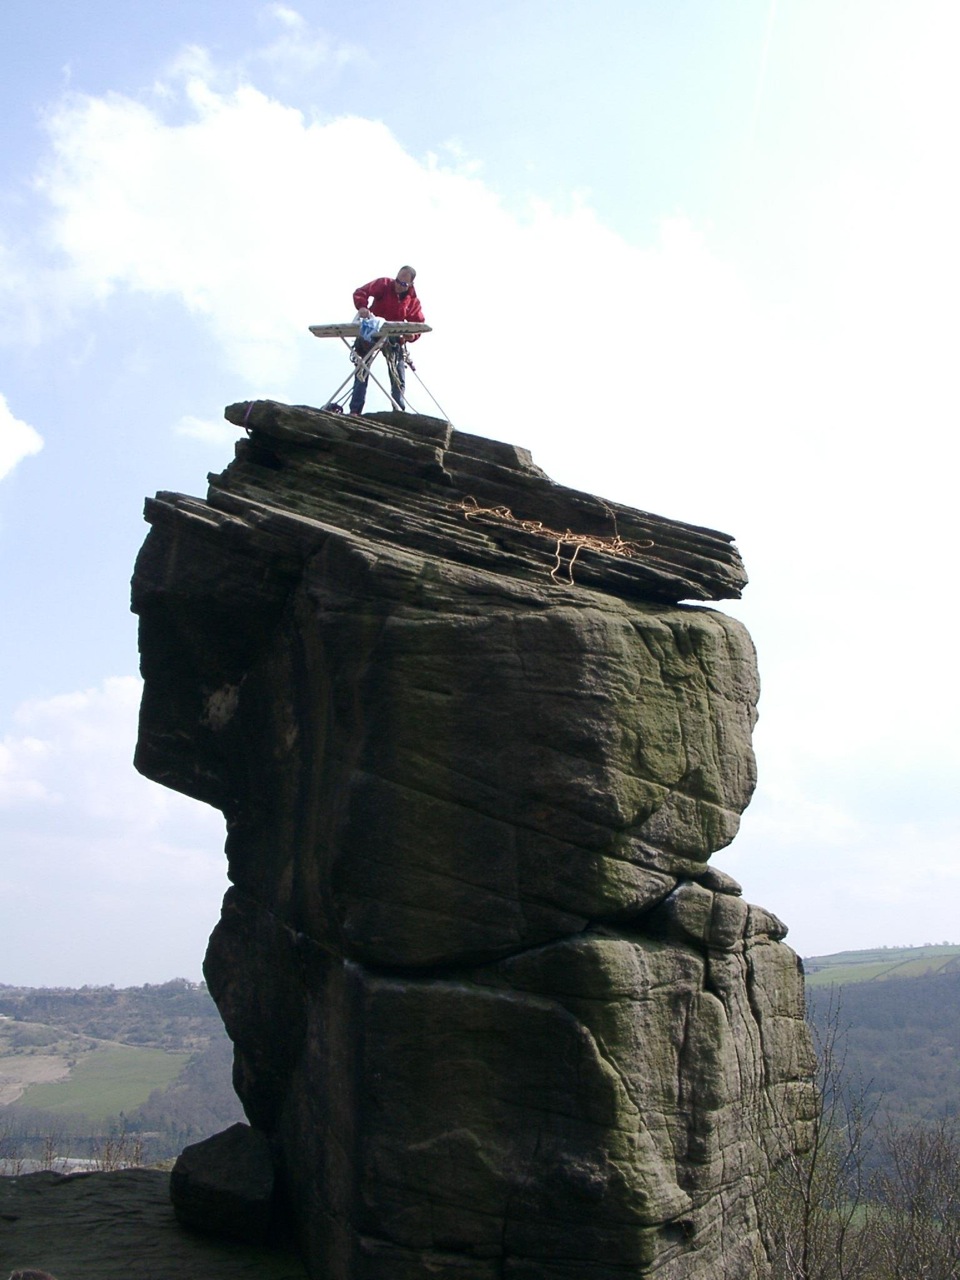 strange hobby extreme ironing, man on top of tall rock formation ironing